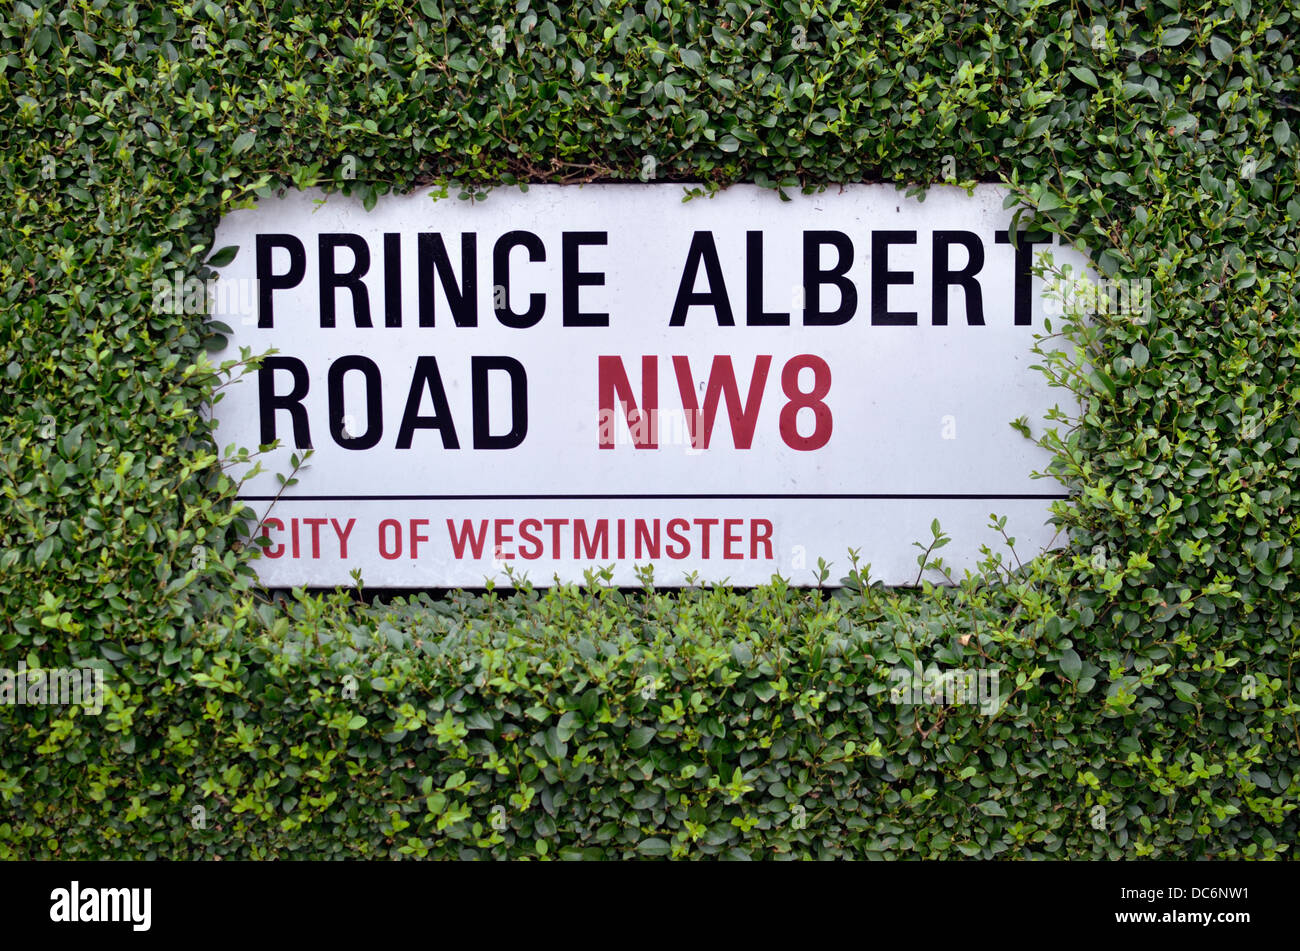 Prince Albert Road NW8 street sign, London, UK Stock Photo